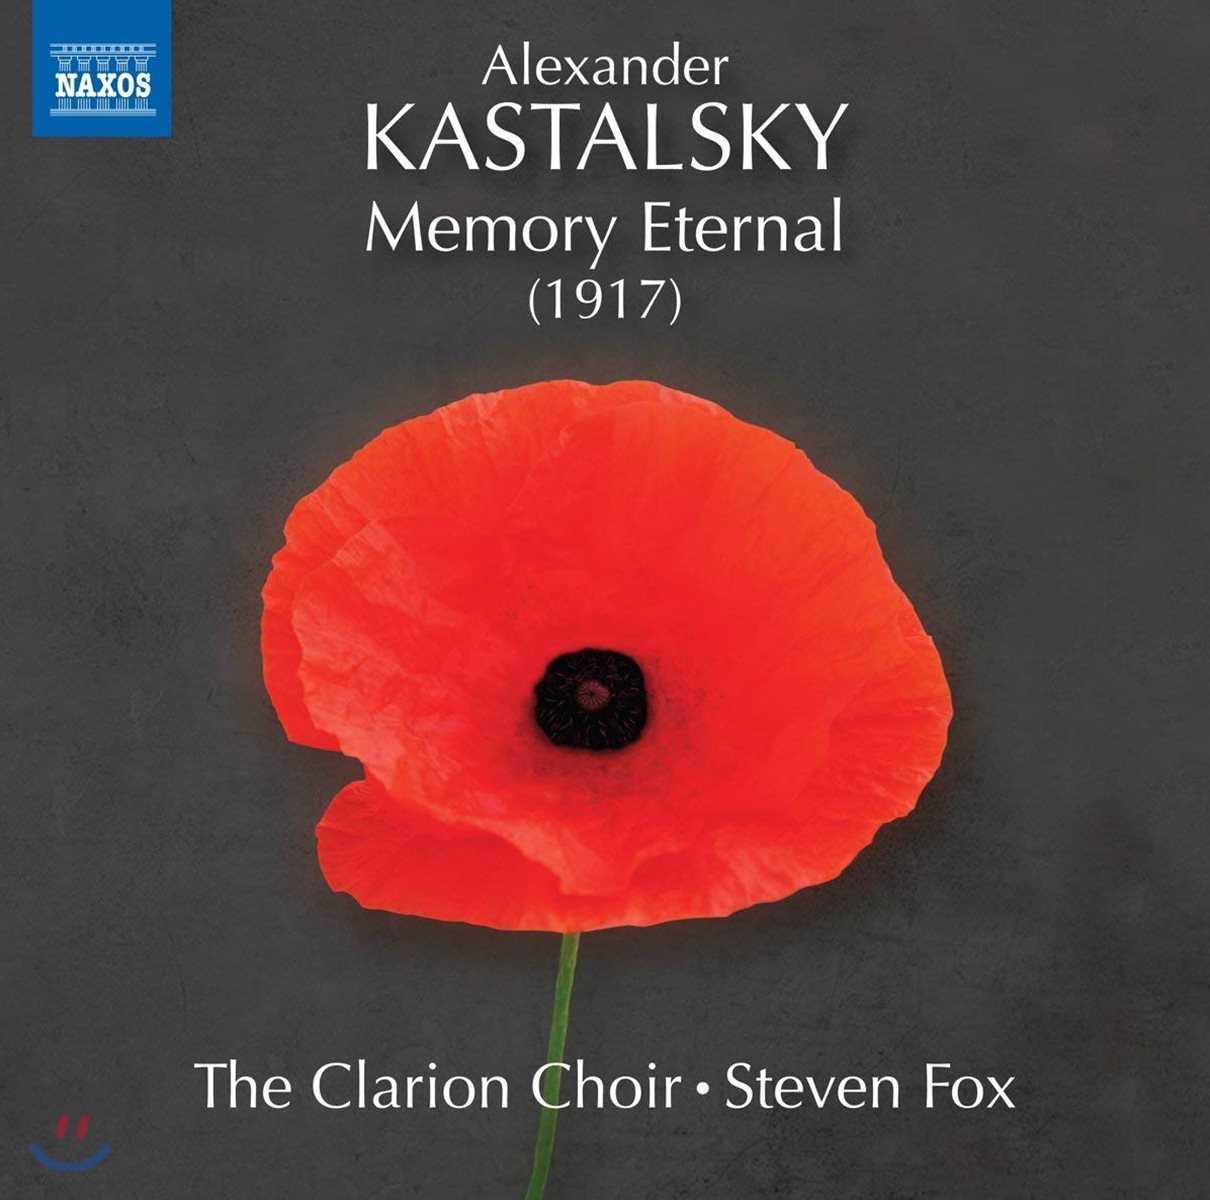 Steven Fox  알렉산더 카스탈스키: 합창음악 작품집 (Kastalsky: Memory Eternal) 스티븐 폭스 